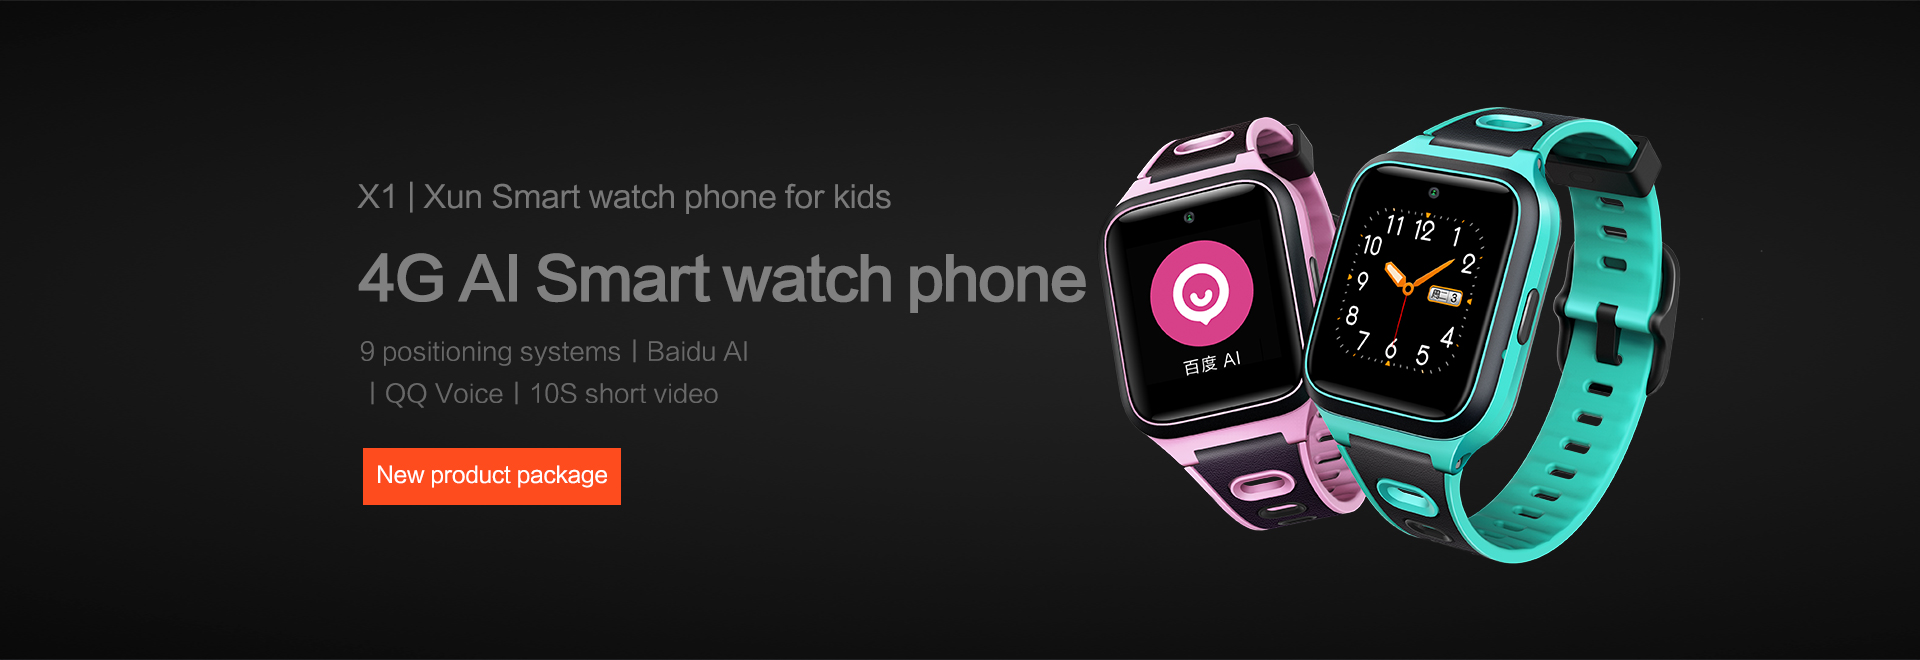 X1 | Xun Smart watch phone for kids